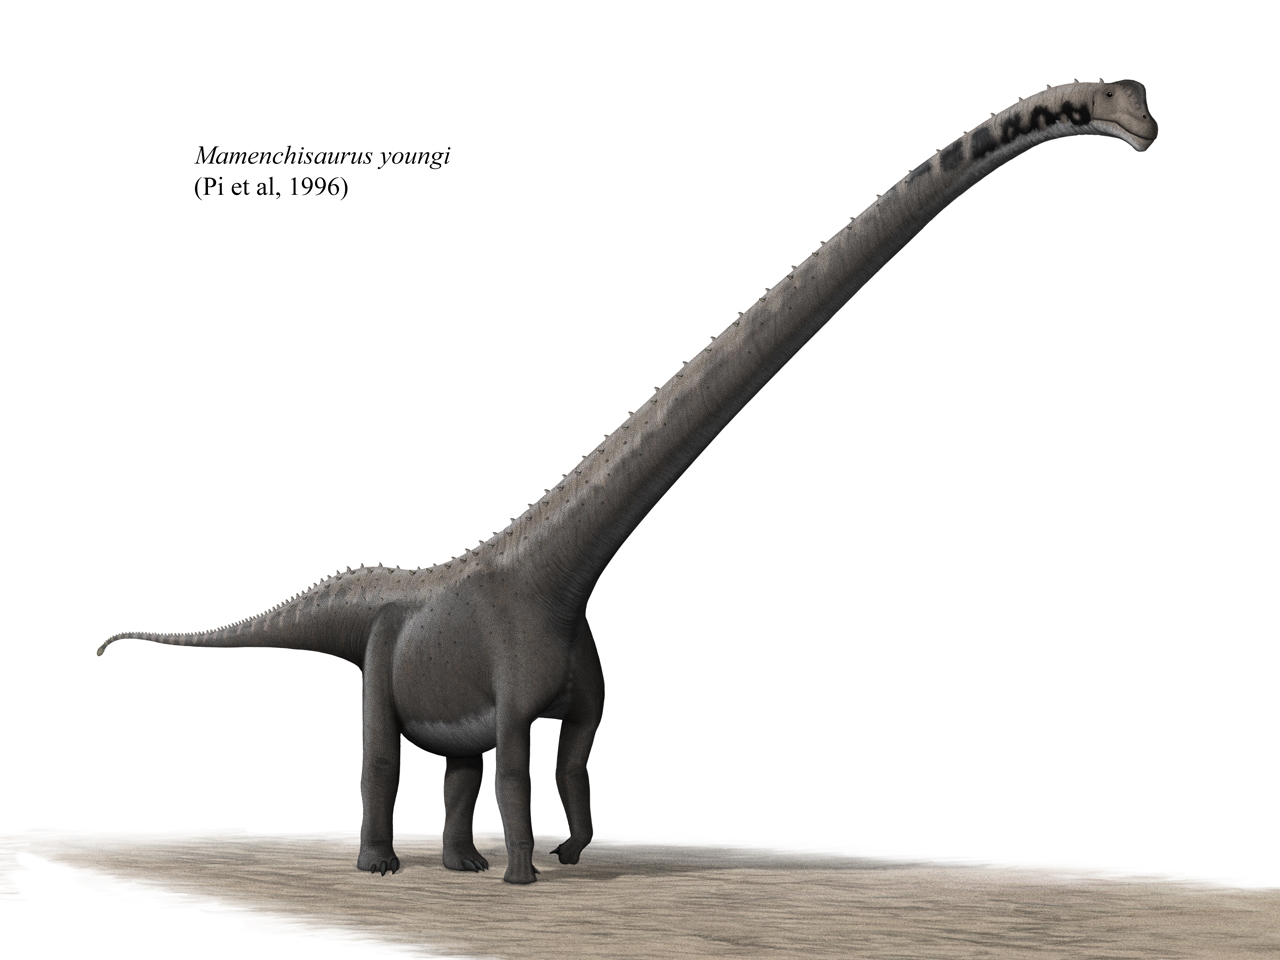 A Mamenchisaurus youngi rekonstrukciója. Forrás: Wikipédia